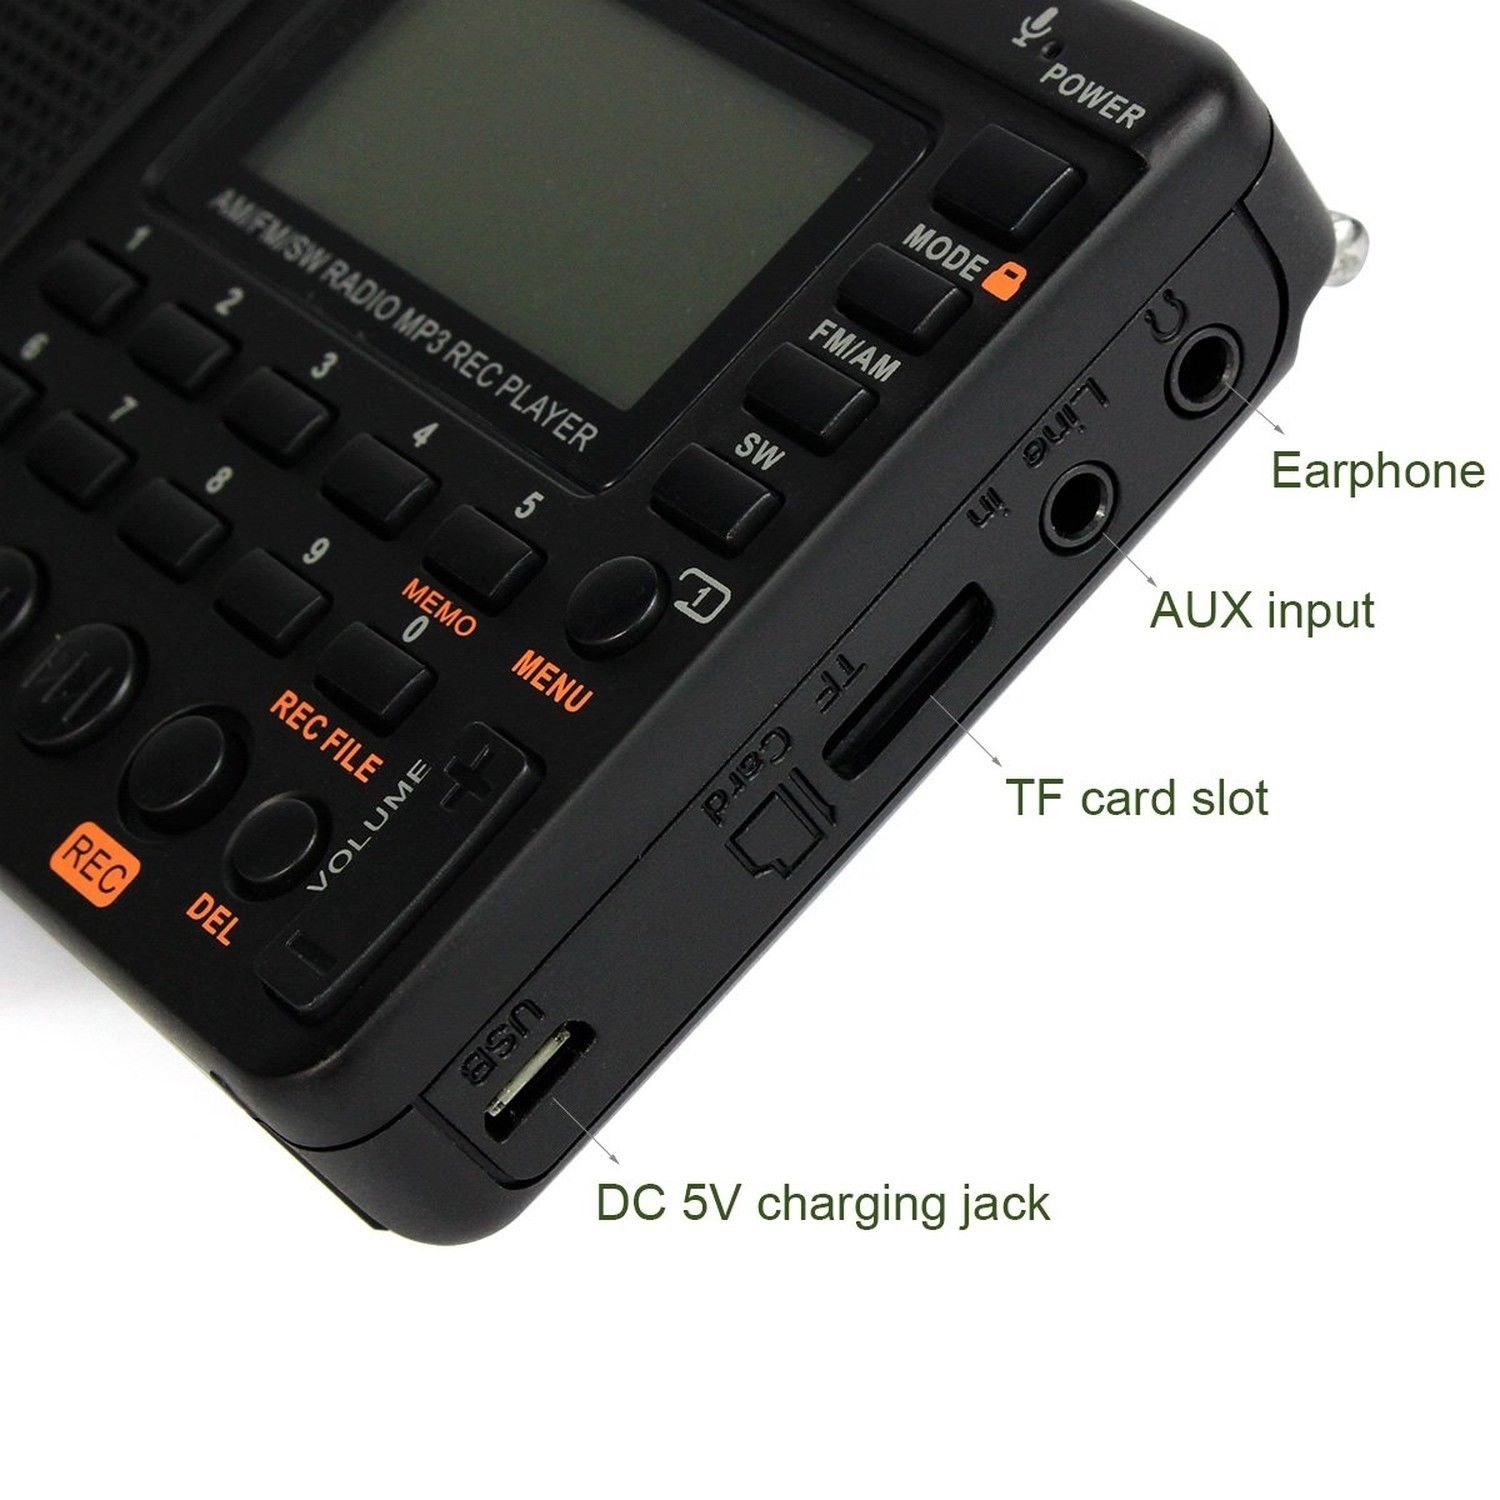 TIVDIO V-115 Portable Shortwave Transistor Radio AM/FM Stereo with MP3